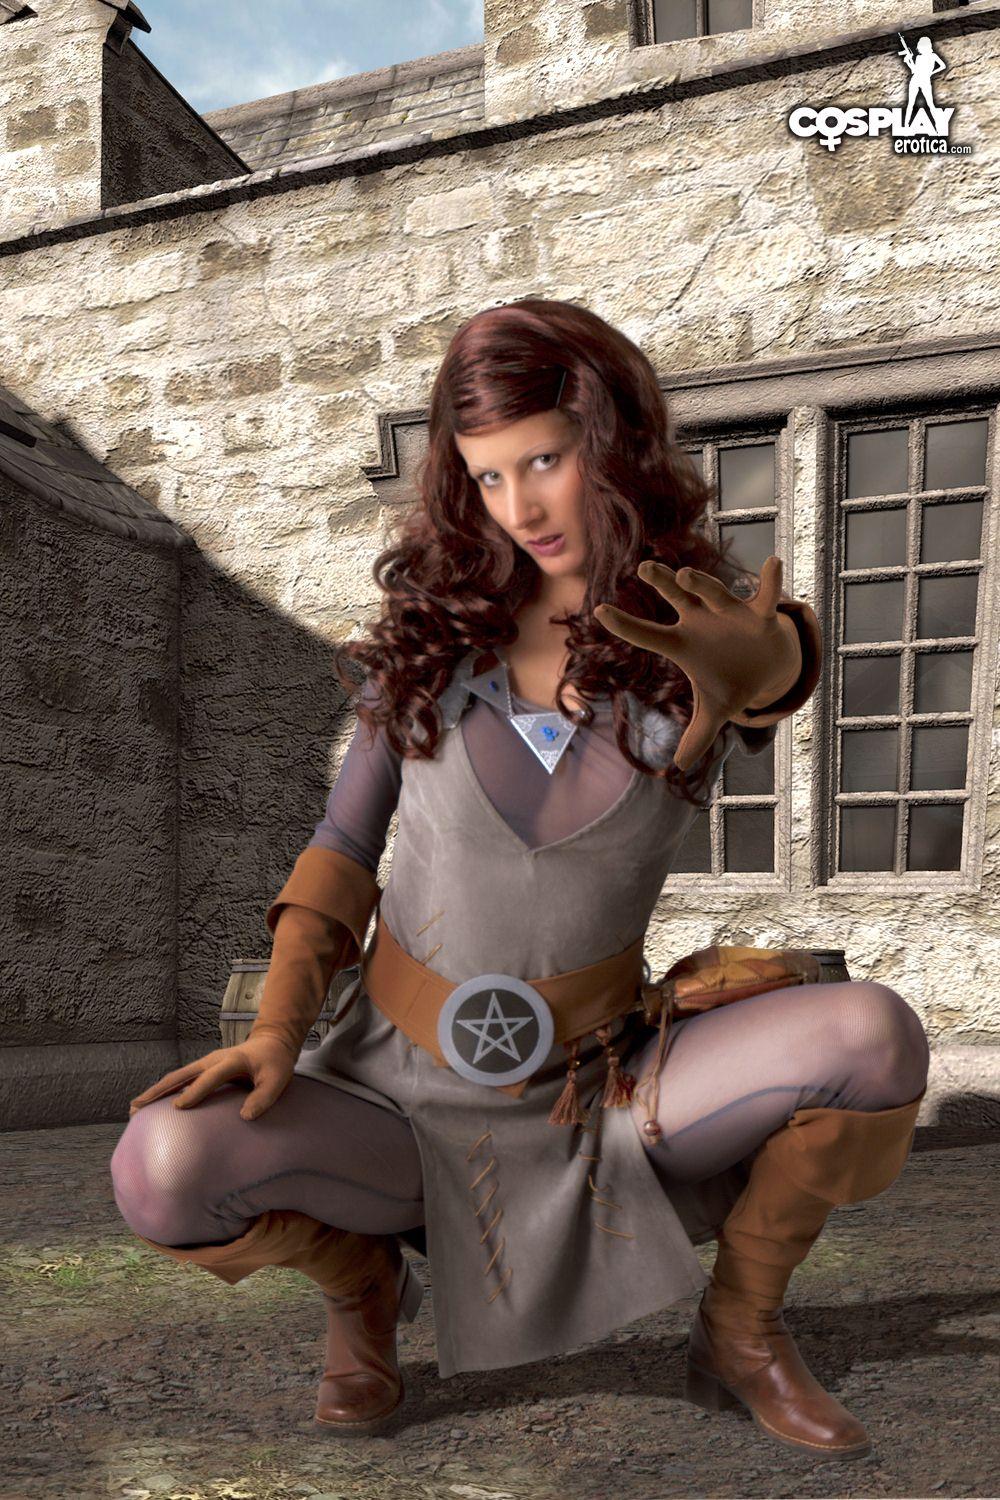 Hot cosplayer tina si veste come un witcher sexy
 #60297670